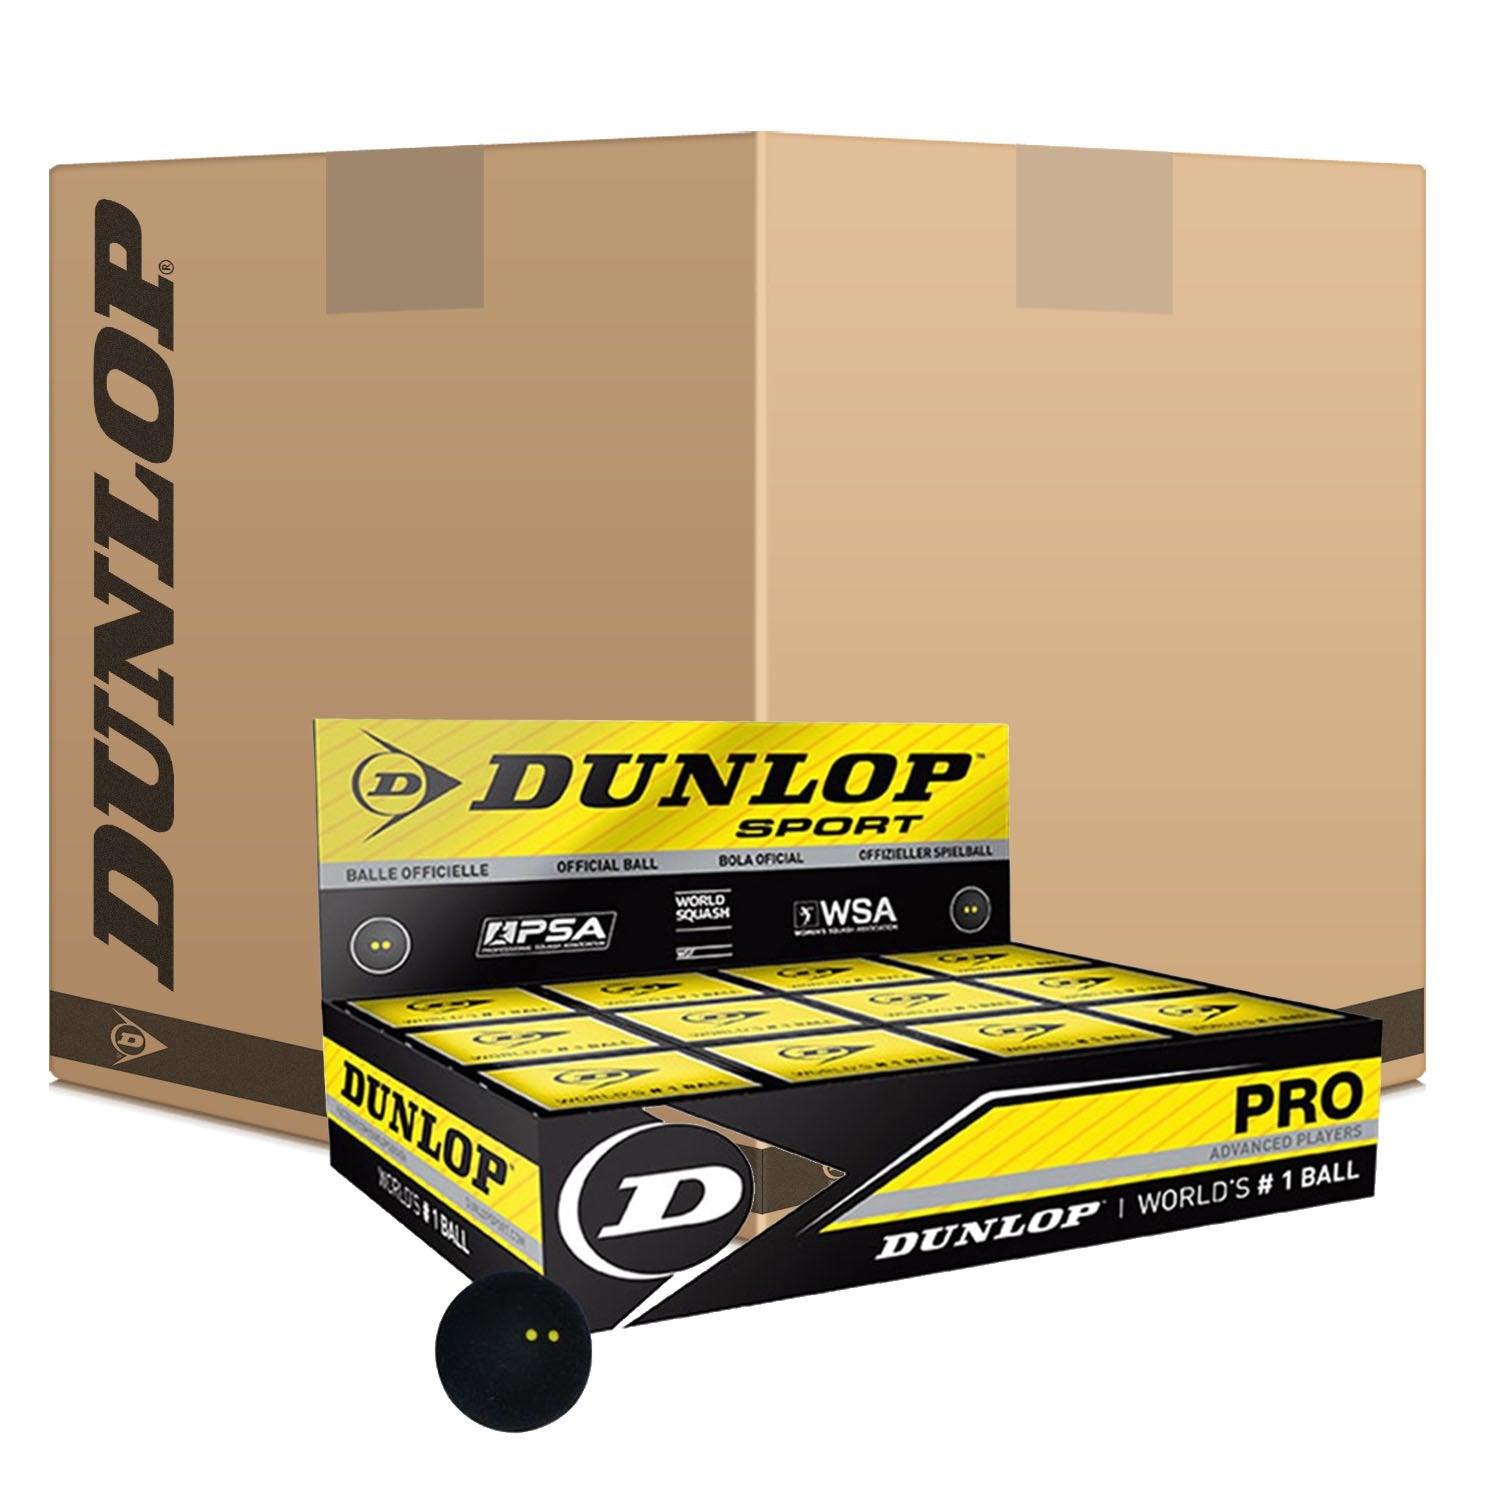 Dunlop Pro Squash Balls - 6 dozen